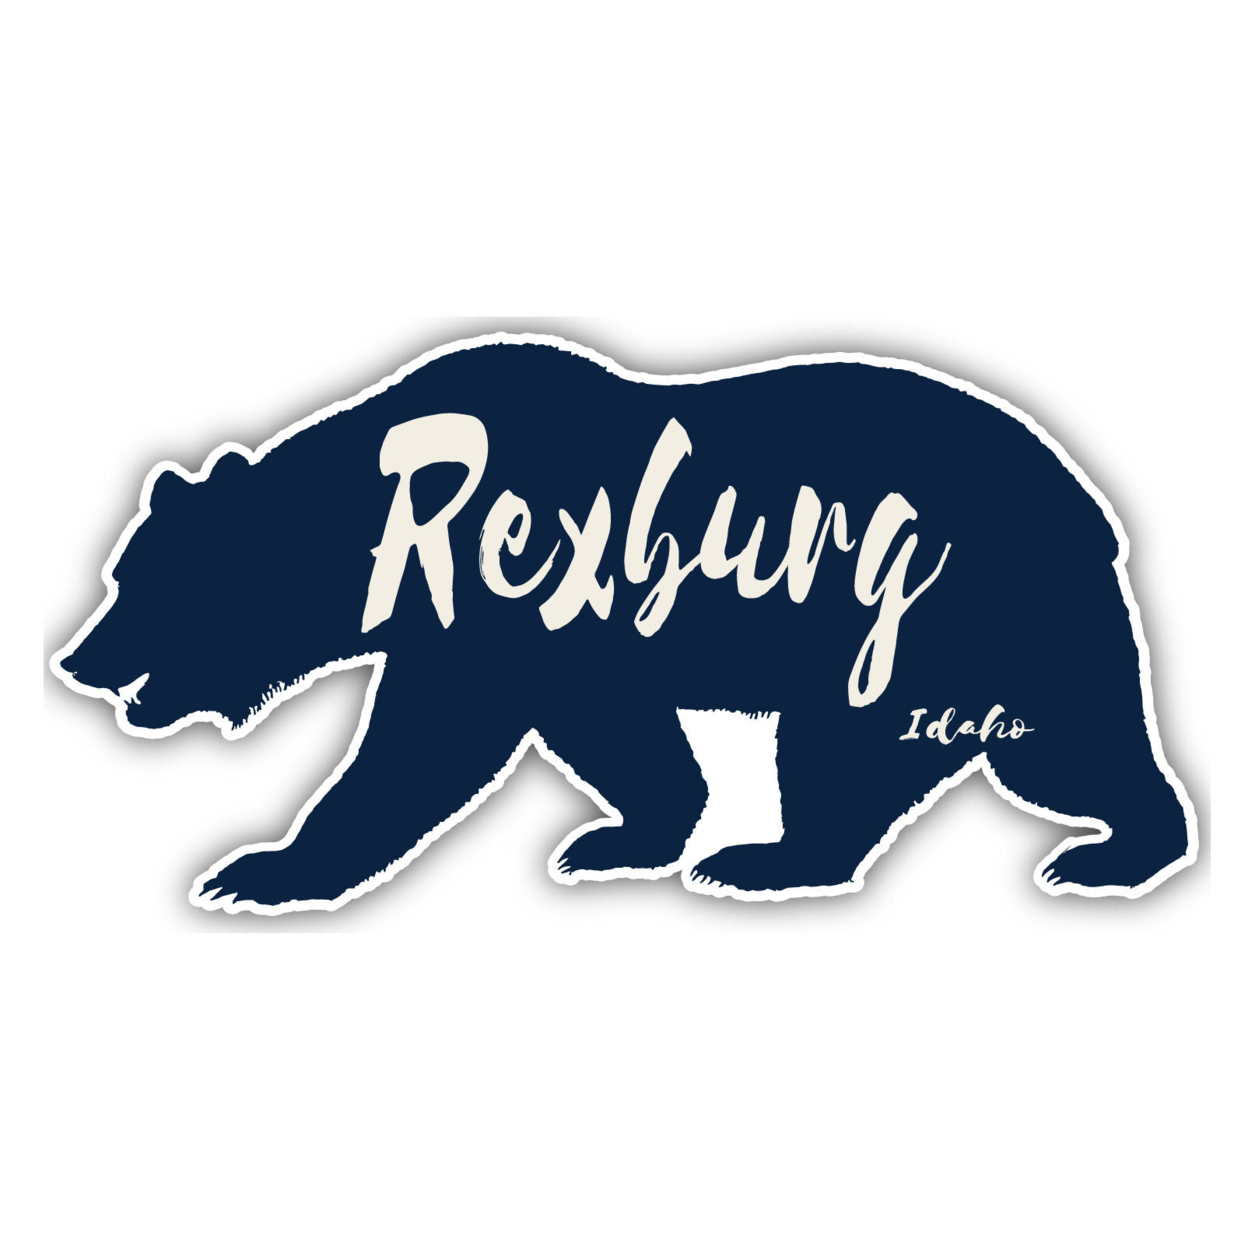 Rexburg Idaho Souvenir Decorative Stickers (Choose Theme And Size) - Single Unit, 4-Inch, Bear